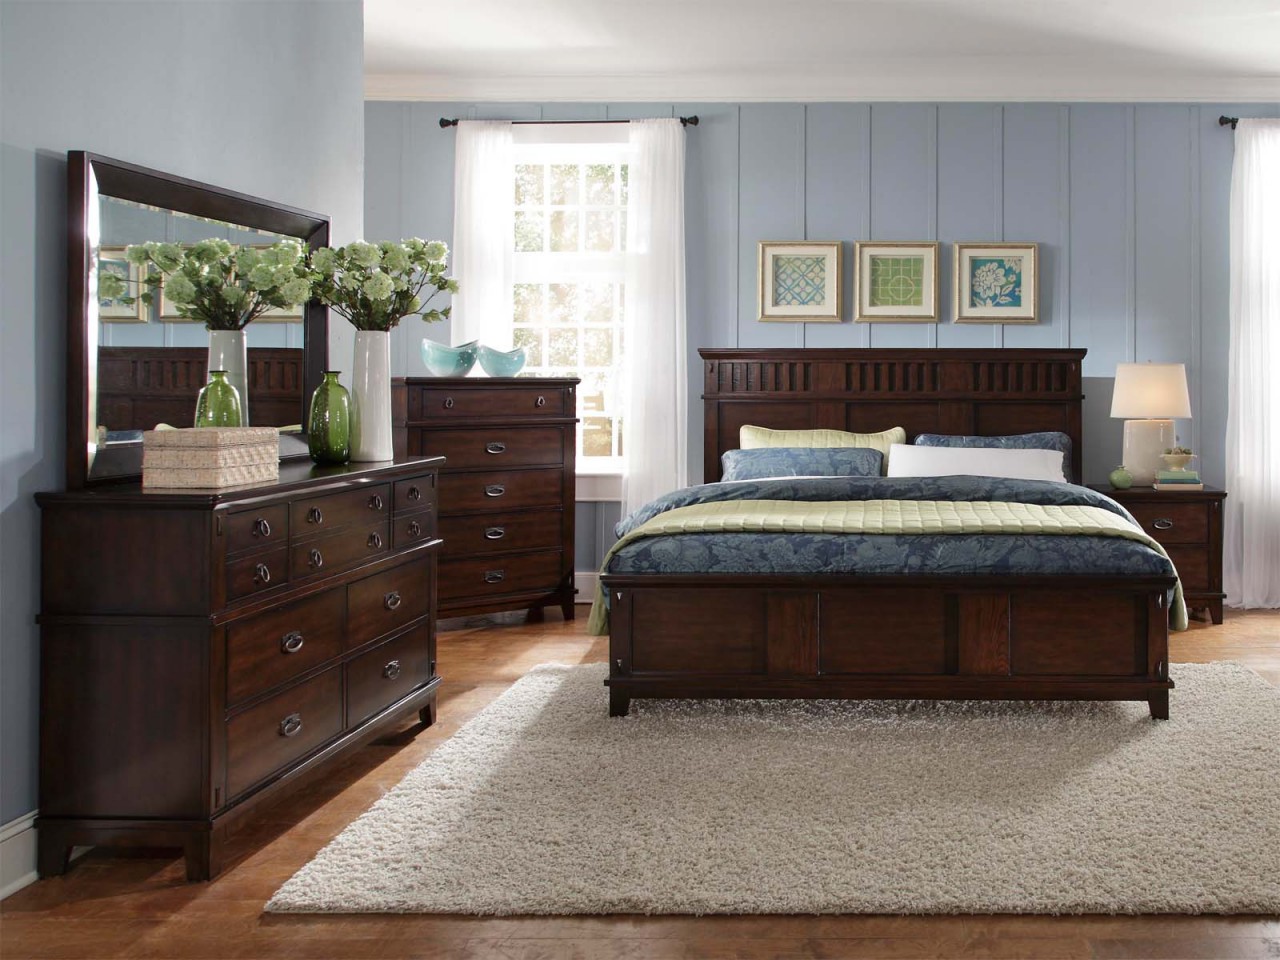 Brown Bedroom Furniture With Artwork